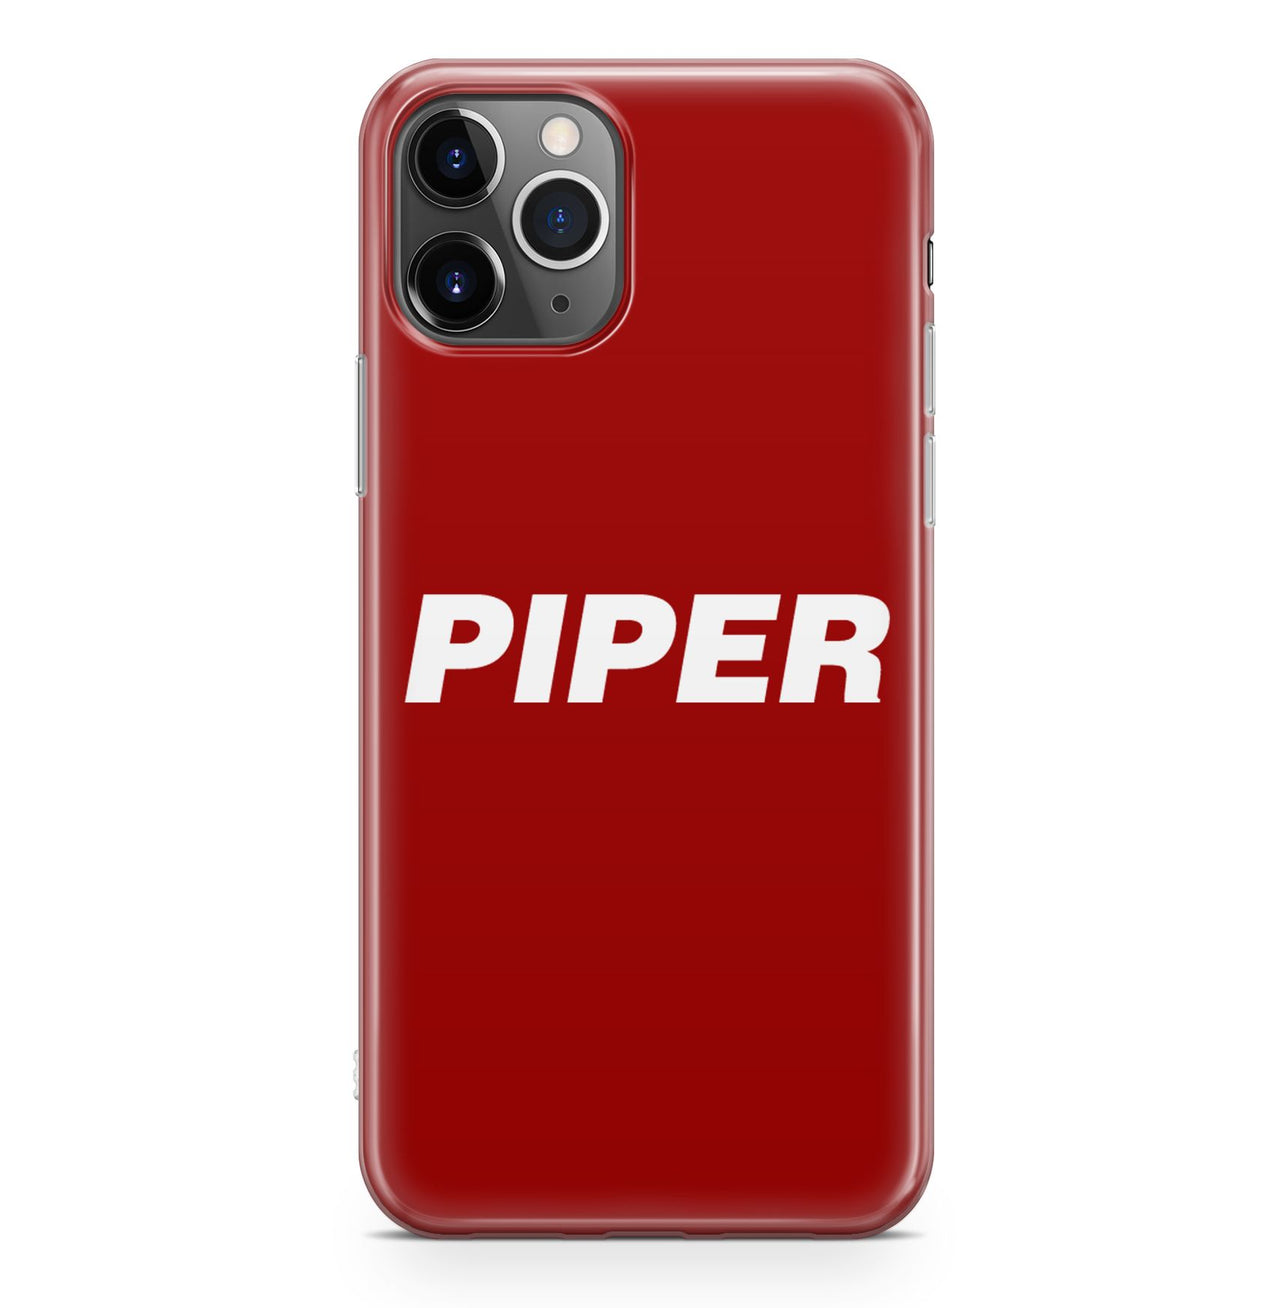 Piper & Text Designed iPhone Cases